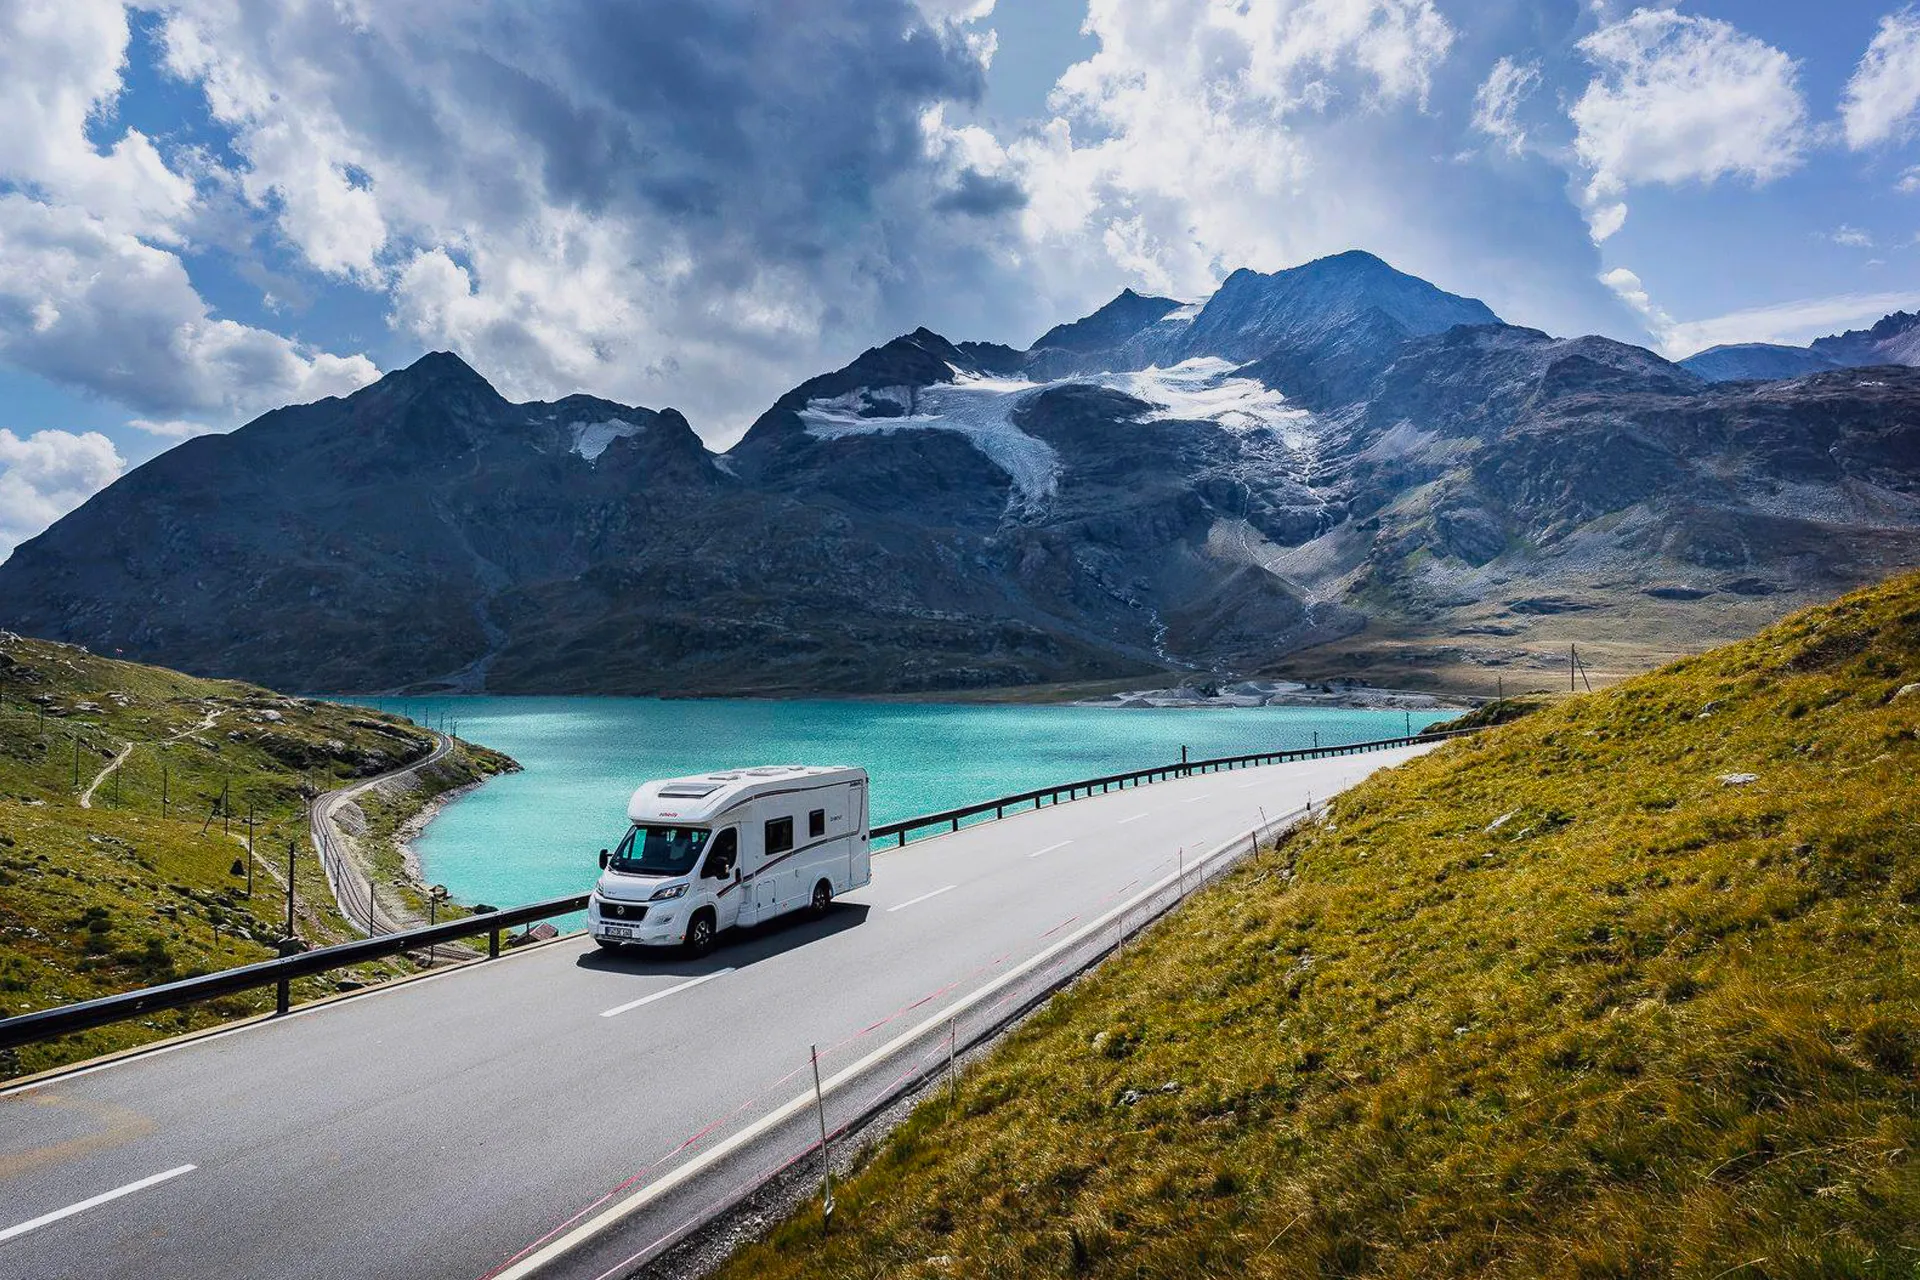 https://www.thelliervoyages.com/sites/default/files/revslider/image/slide-thellier-voyages-camping-car-lac-montagne.webp